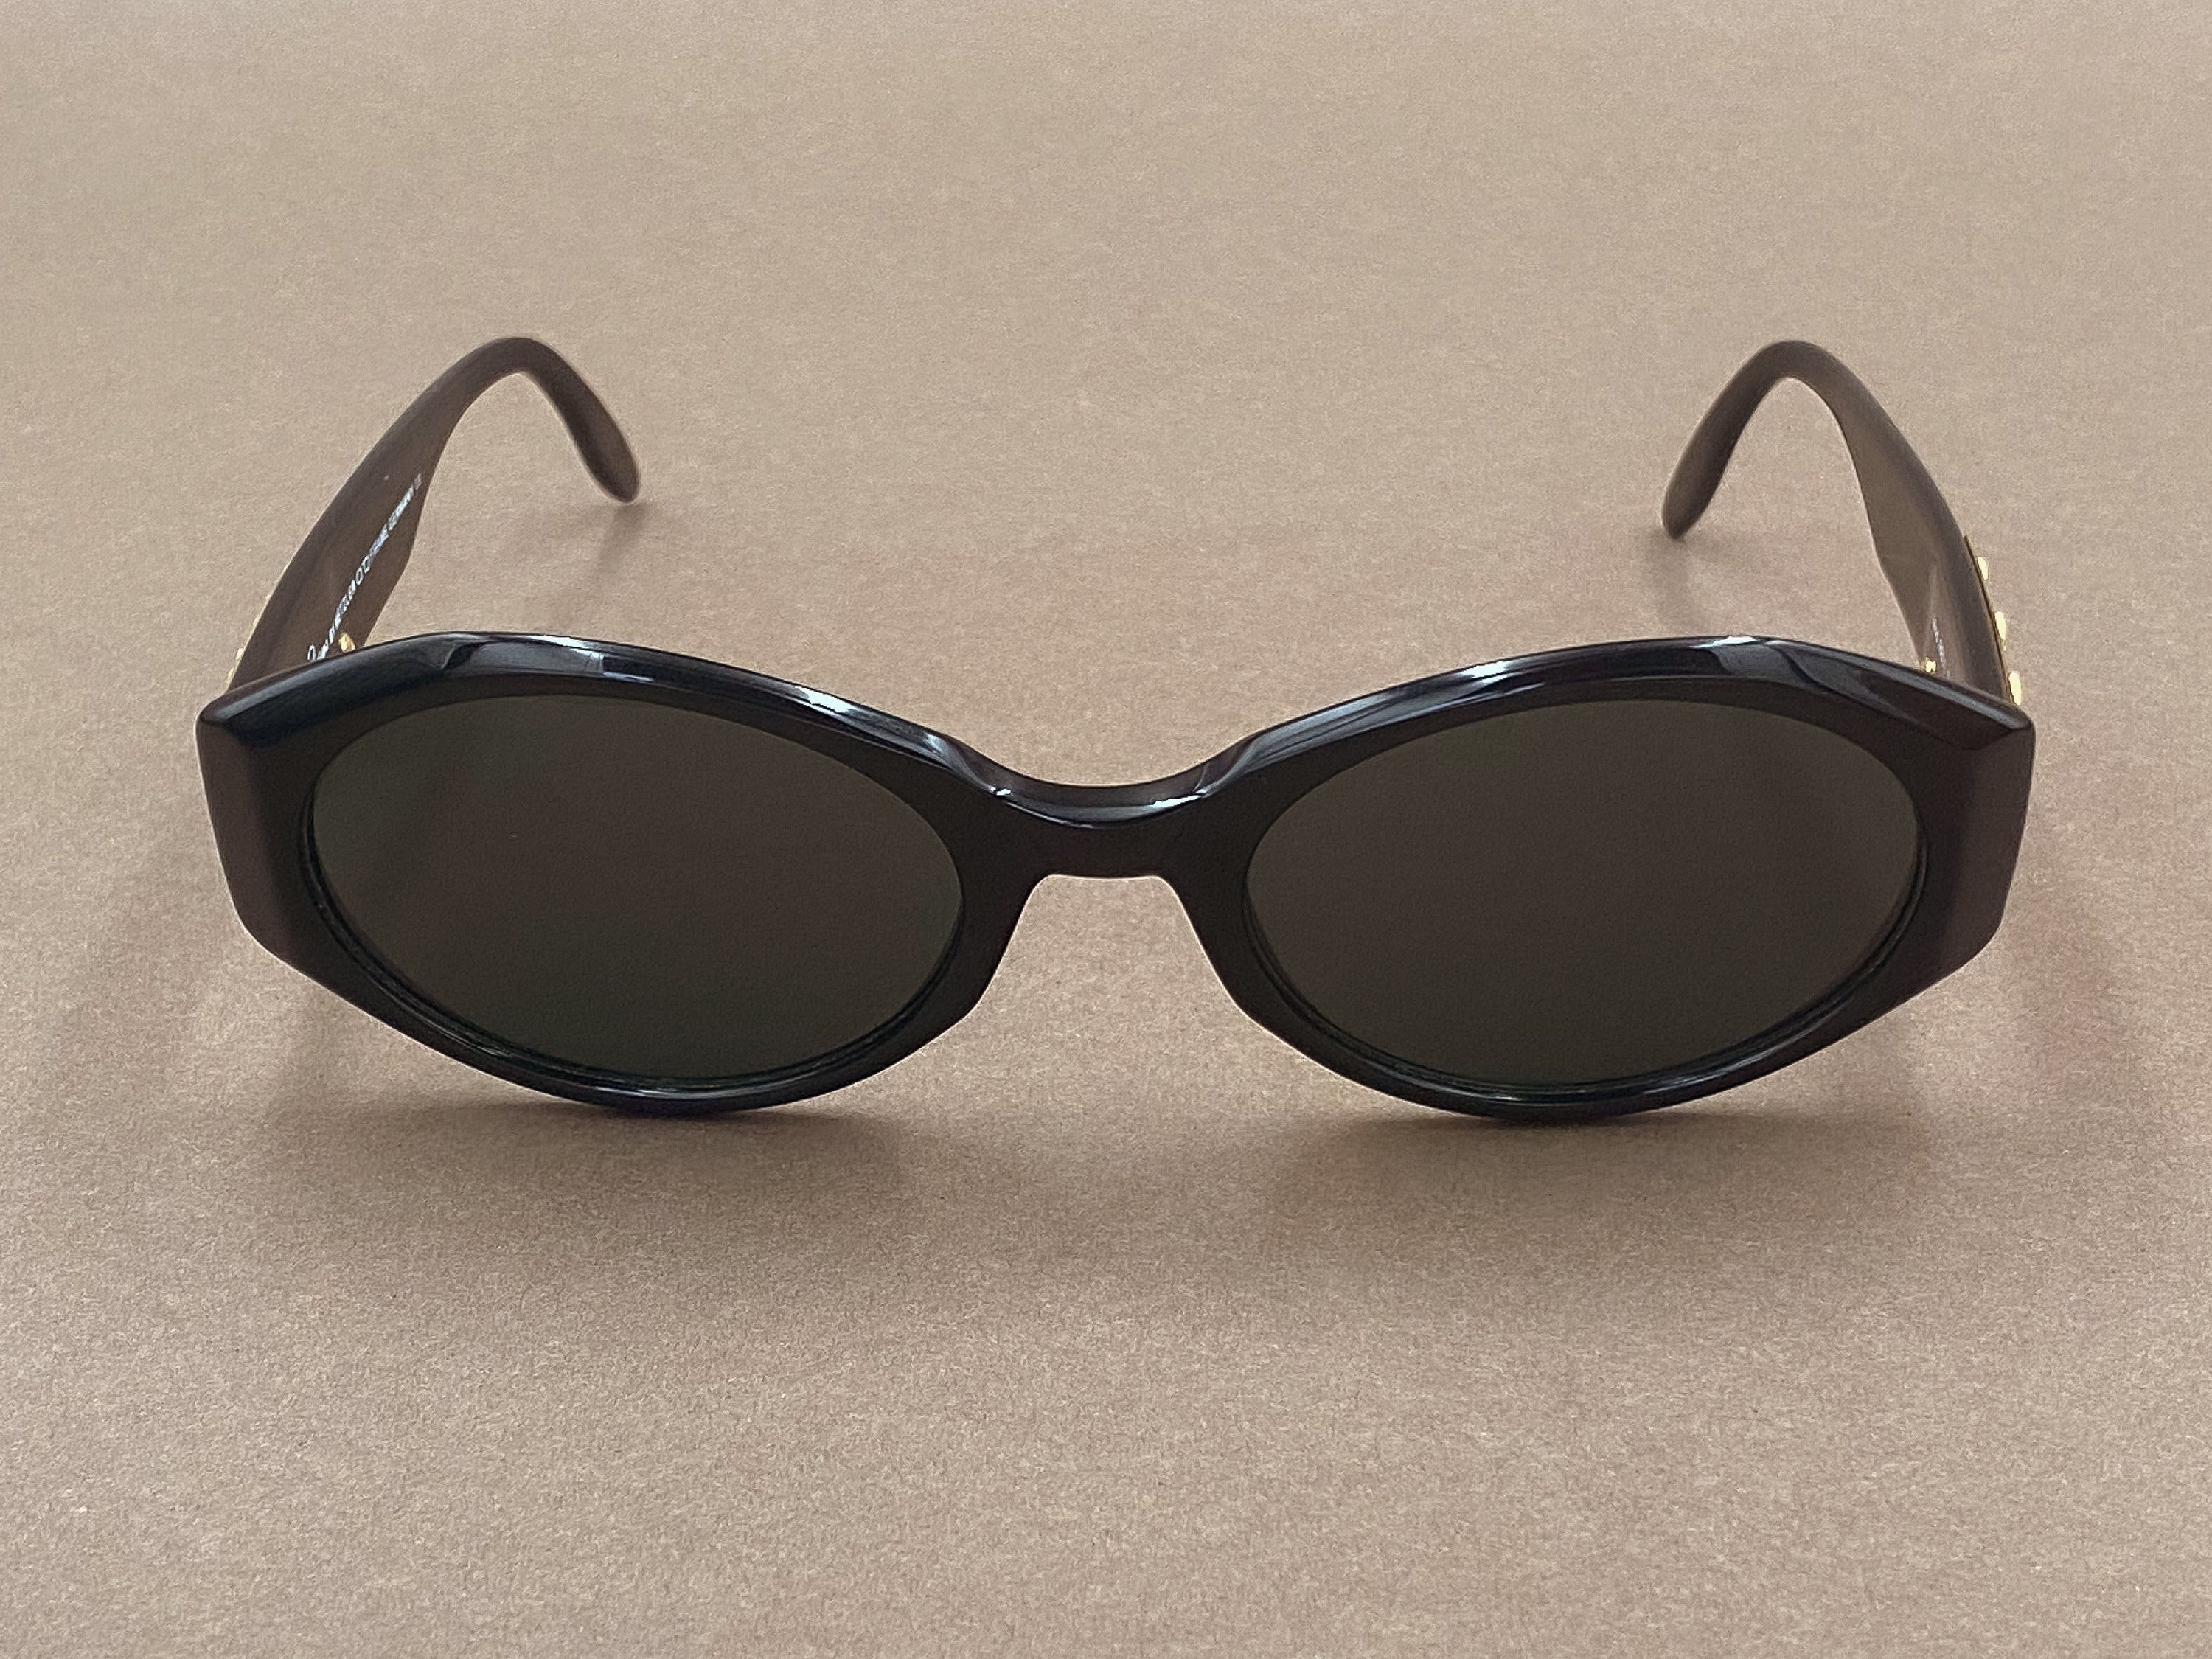 Paloma Picasso 8811 ladies sunglasses